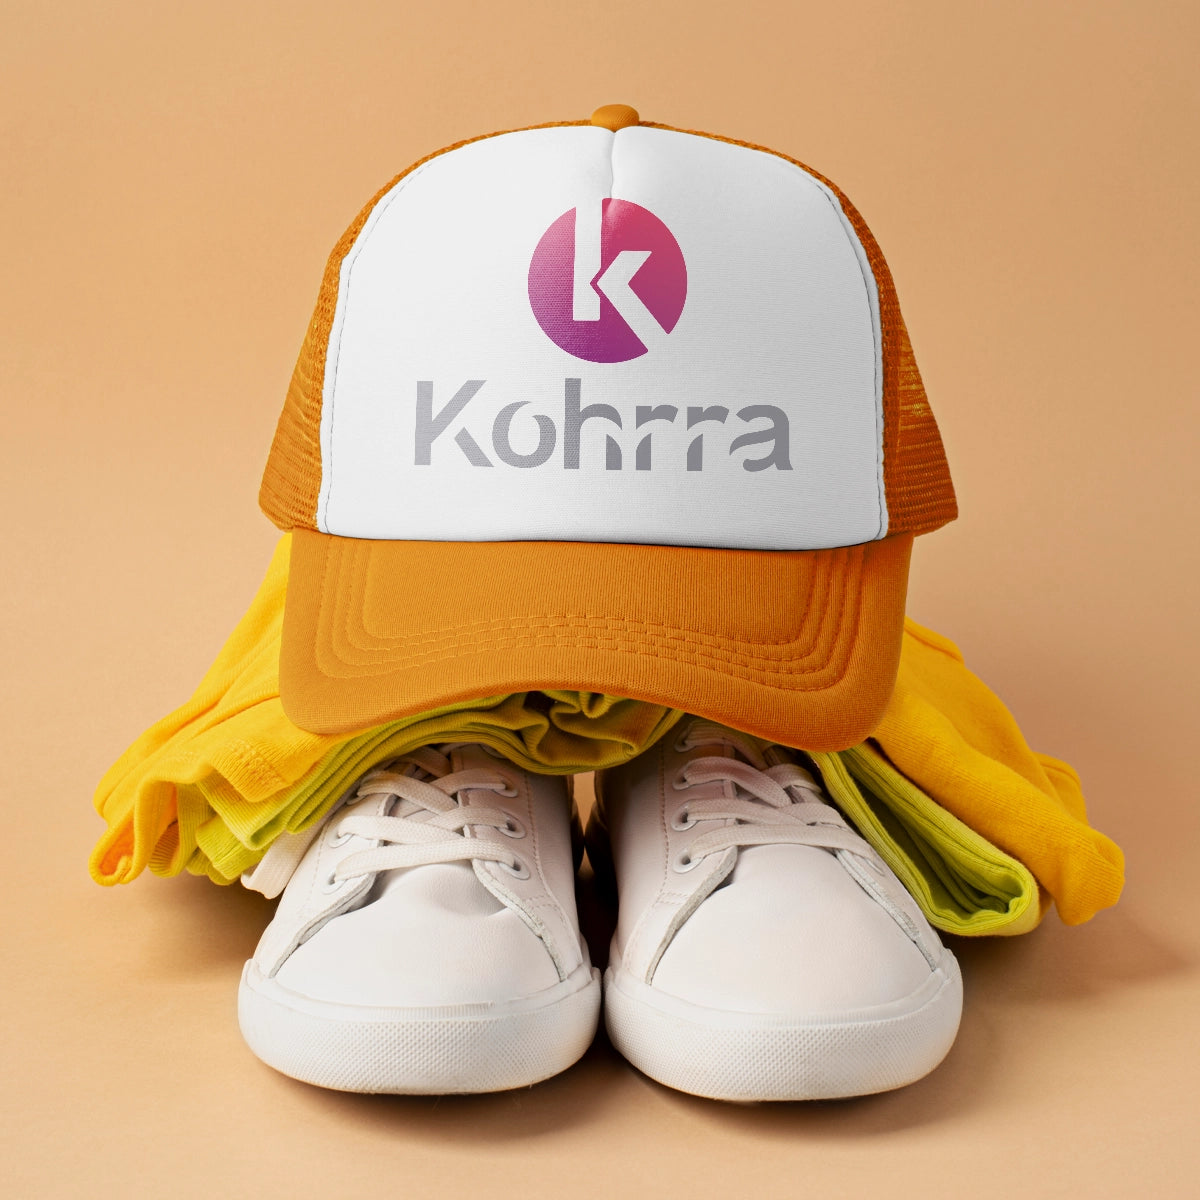 kohrra.com